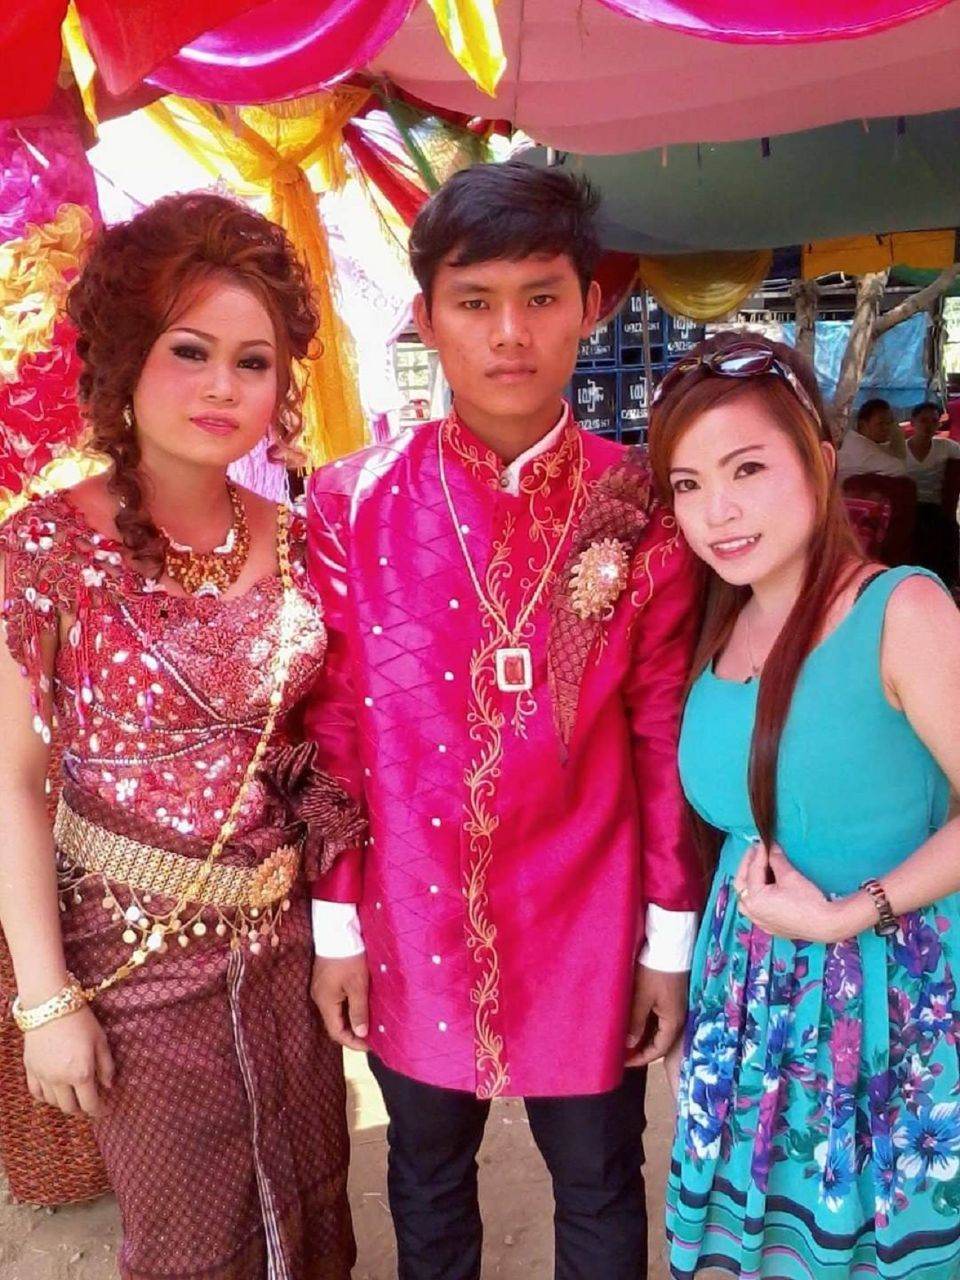 Cambodia national costume (សំពត់) 🇰🇭